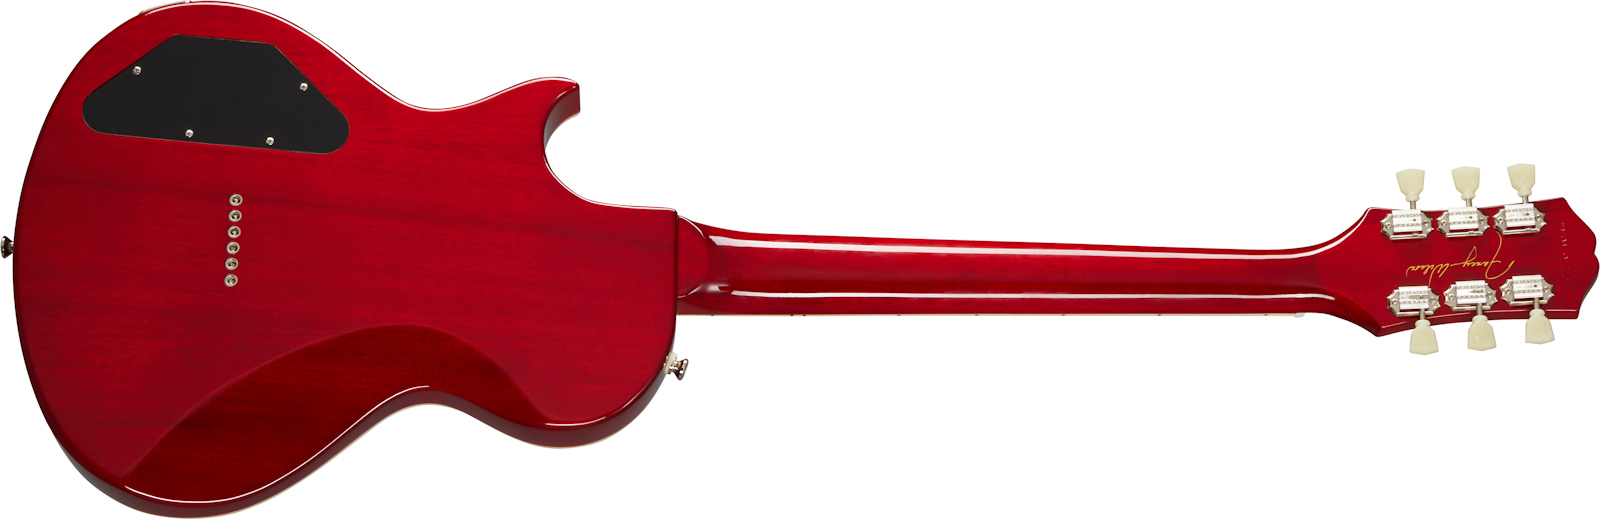 Epiphone Nancy Wilson Fanatic Signature Hmh Ht Eb - Fireburst - Single-Cut-E-Gitarre - Variation 1